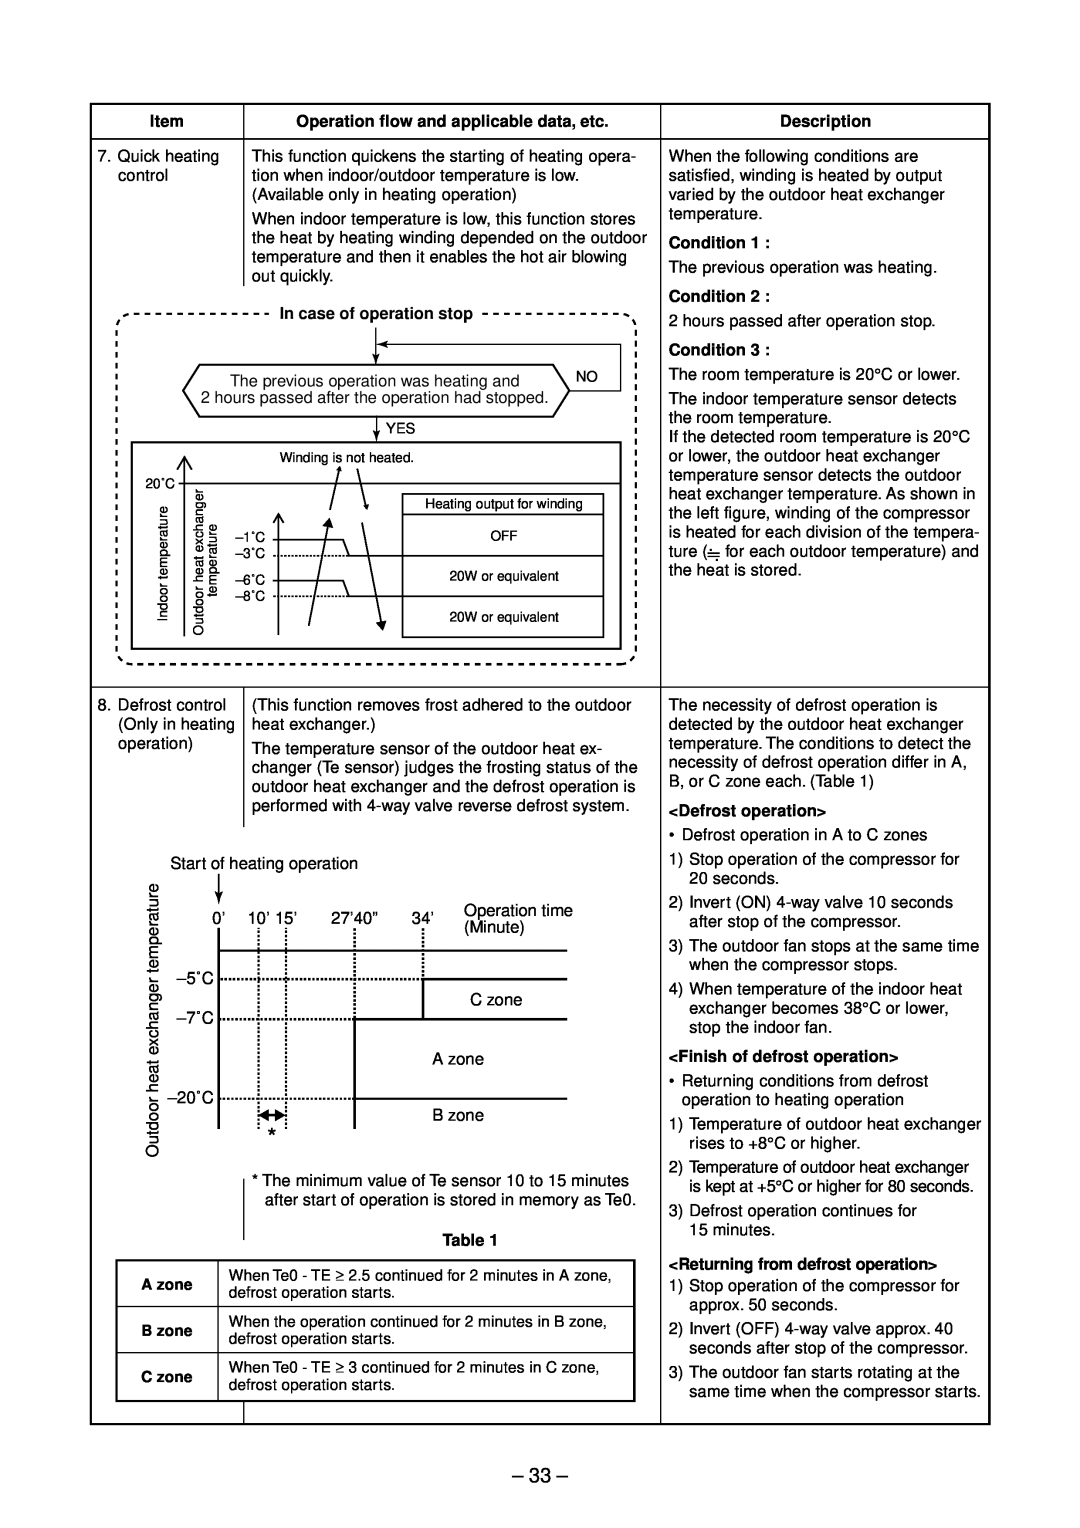 Toshiba RAS-13GAVP-E Operation flow and applicable data, etc, In case of operation stop, Description, Condition 